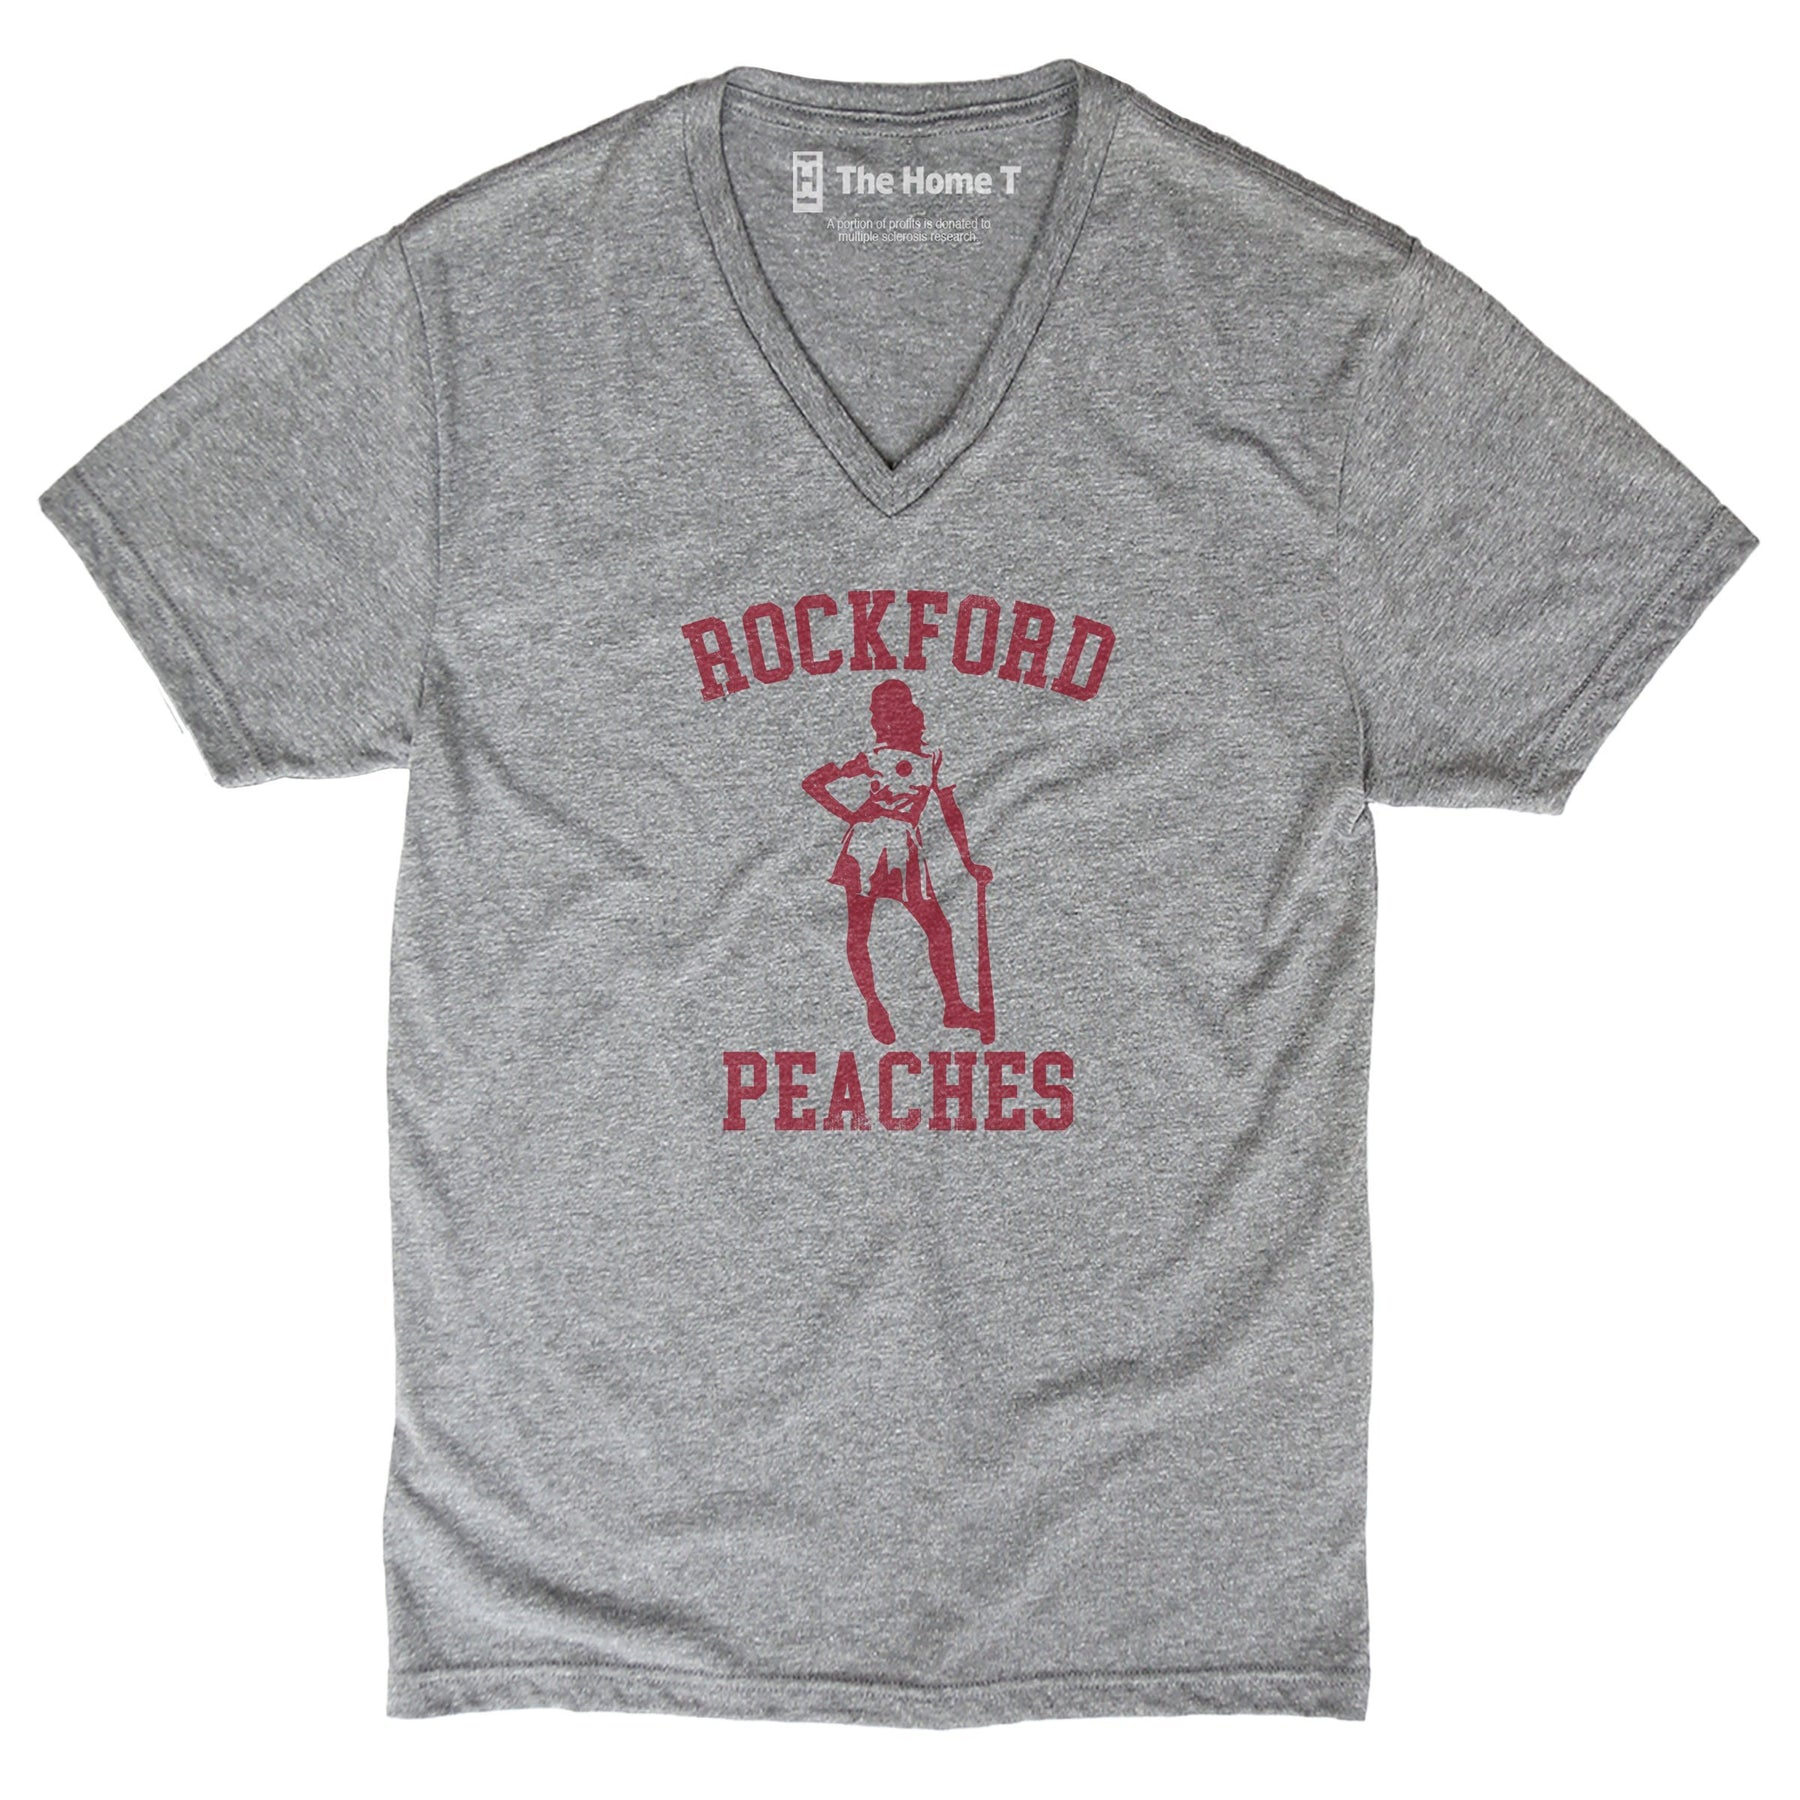 Rockford Peaches Crew neck The Home T XS V Neck